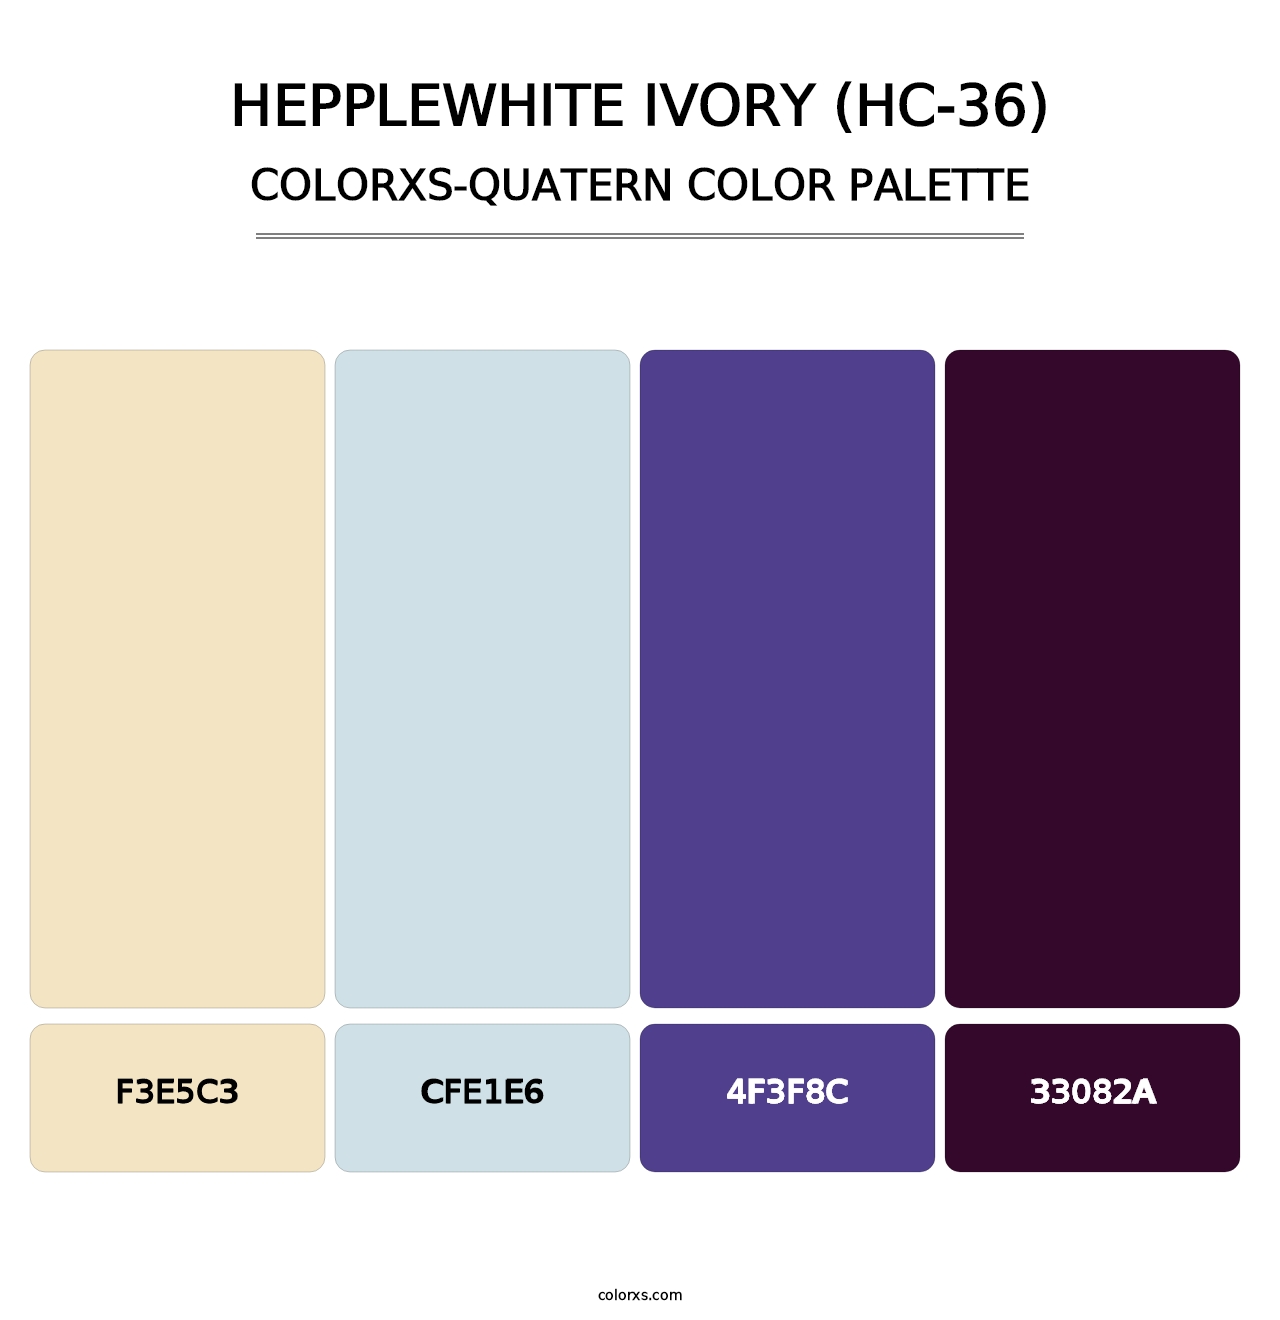 Hepplewhite Ivory (HC-36) - Colorxs Quatern Palette